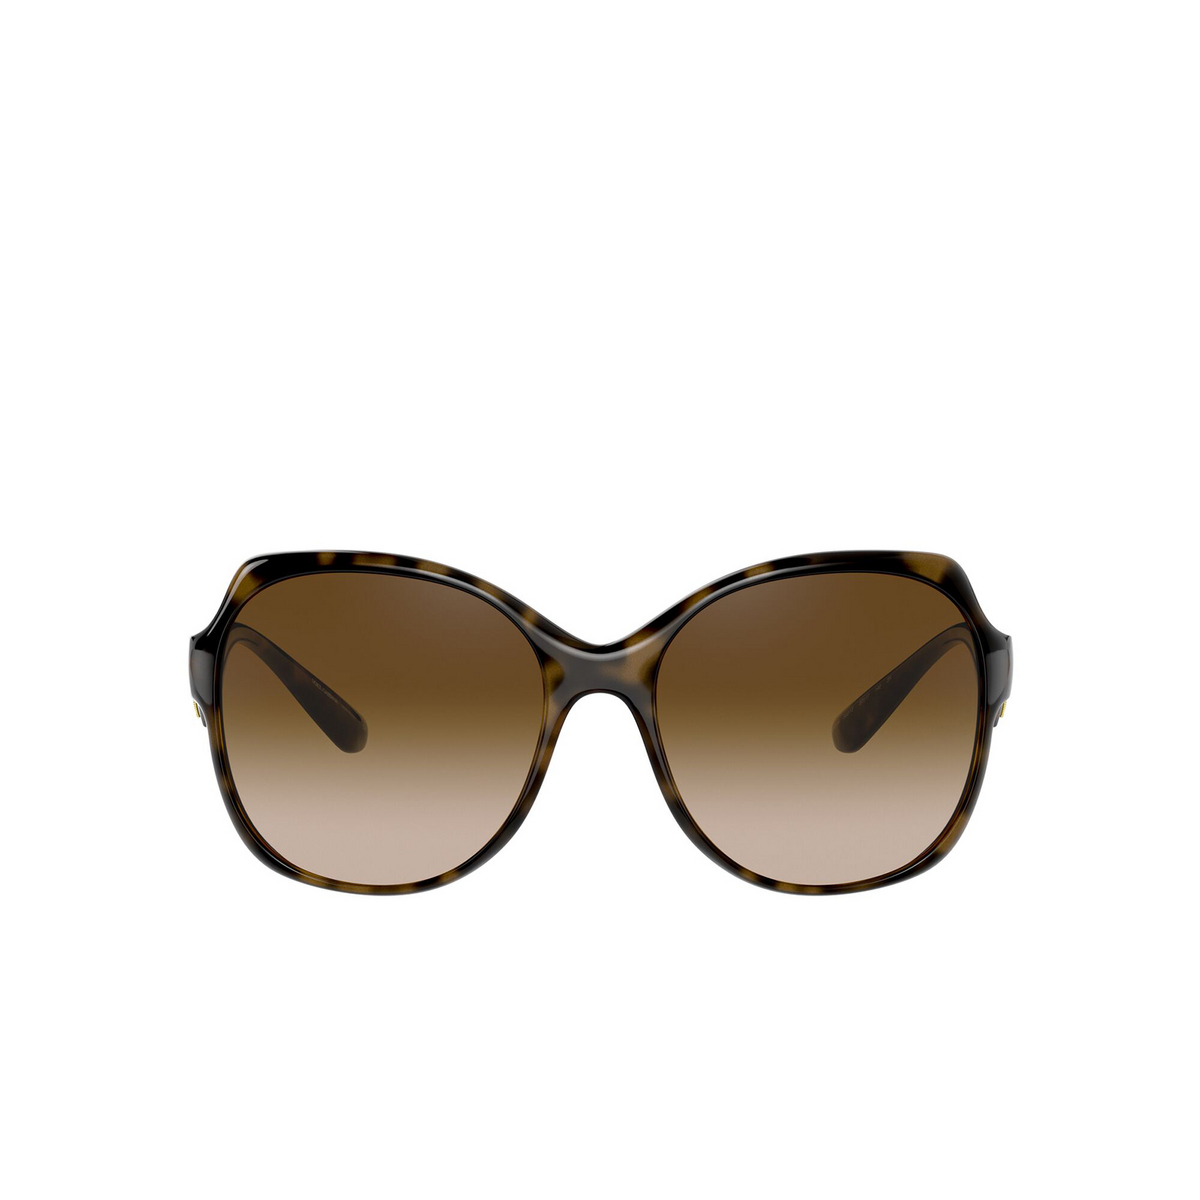 Dolce & Gabbana DG6154 Sunglasses 502/13 Havana - front view